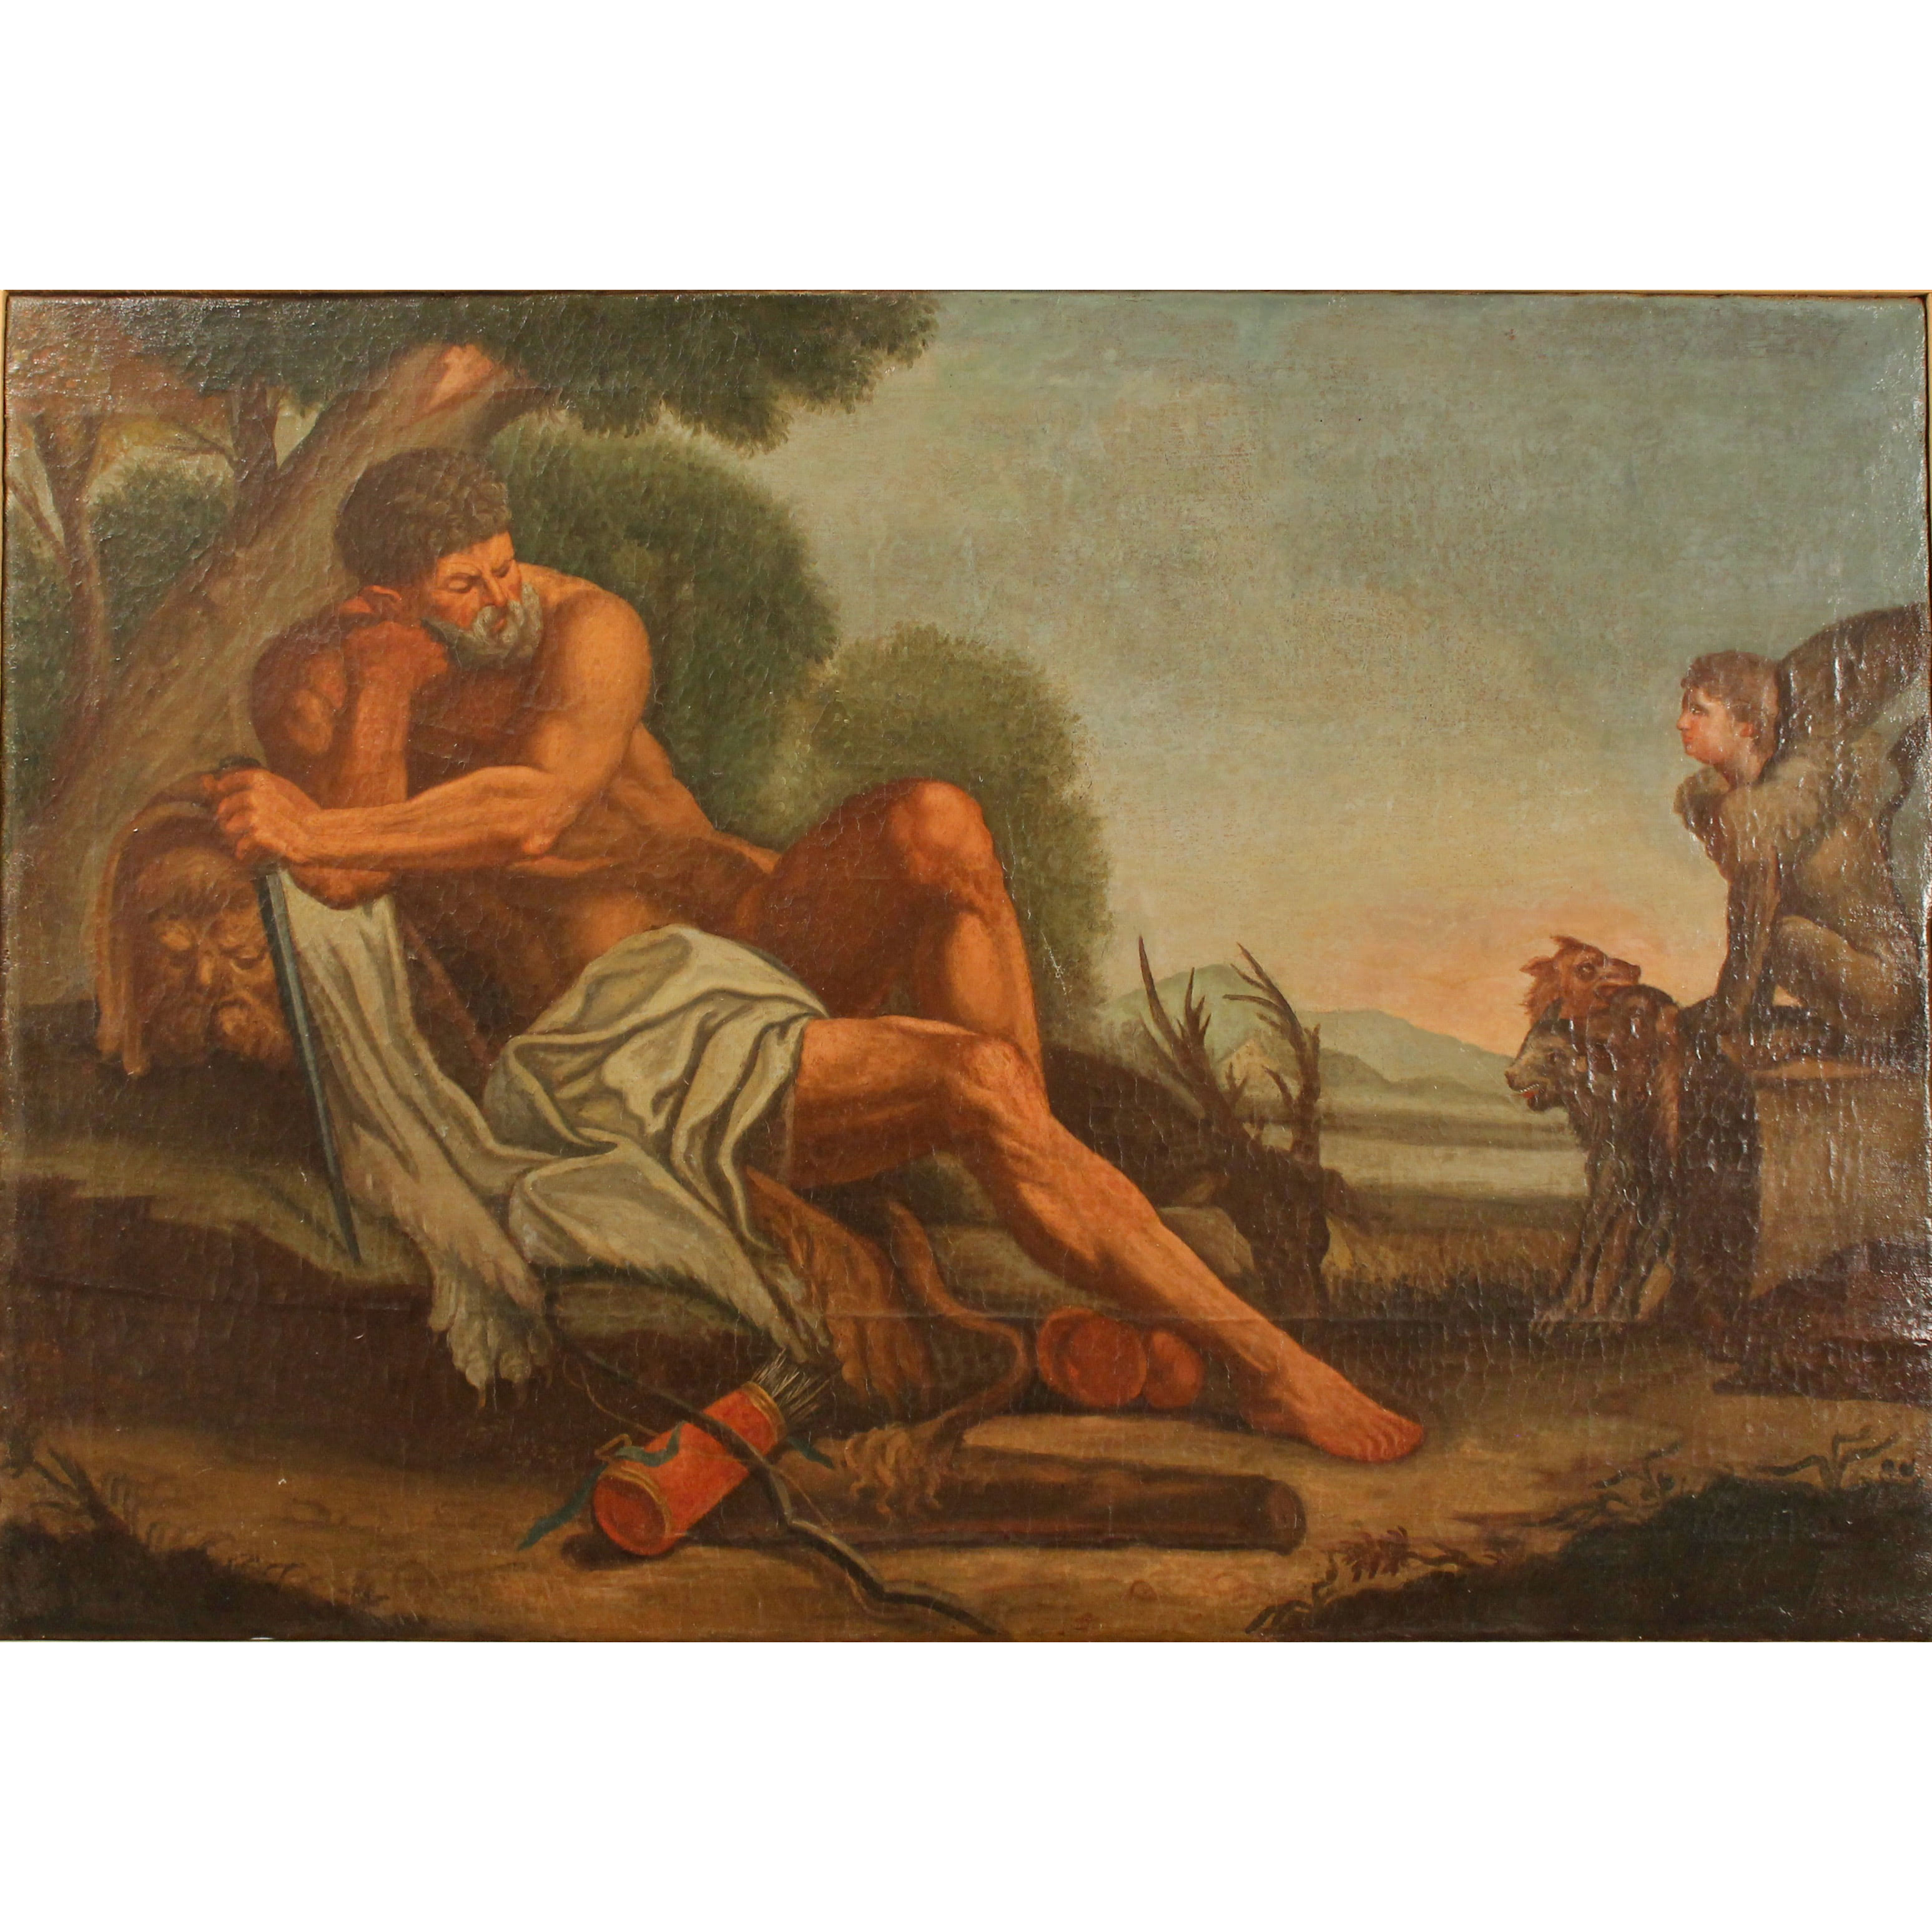 Scuola siciliana del secolo XVIII "Scena mitologica" - Sicilian school of the eighteenth century "Mythological scene"